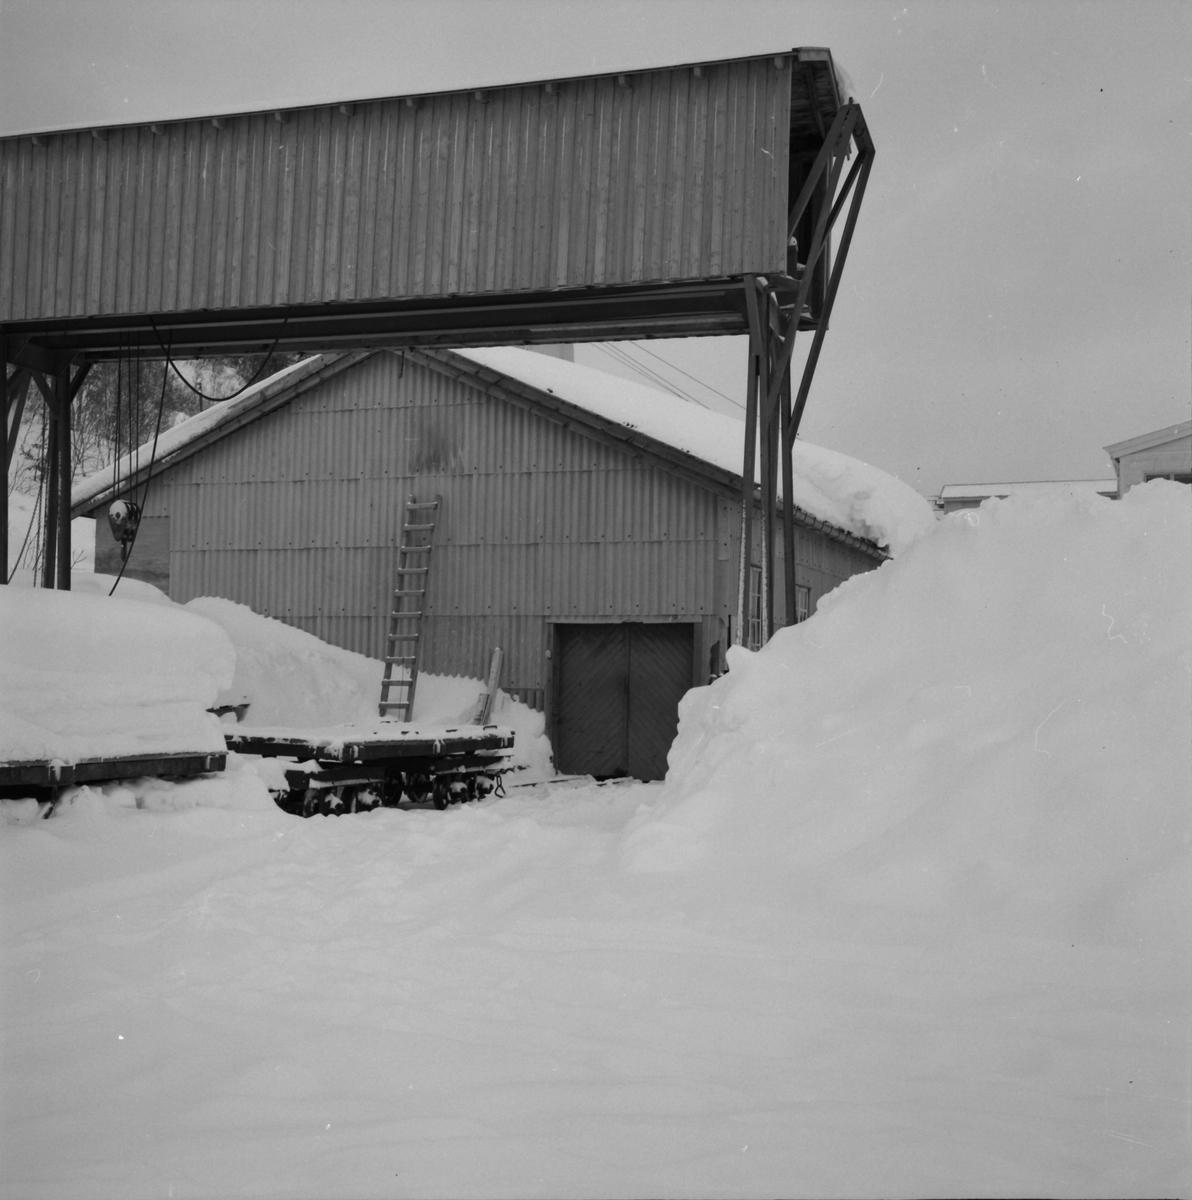 Mye snø i industrområde.